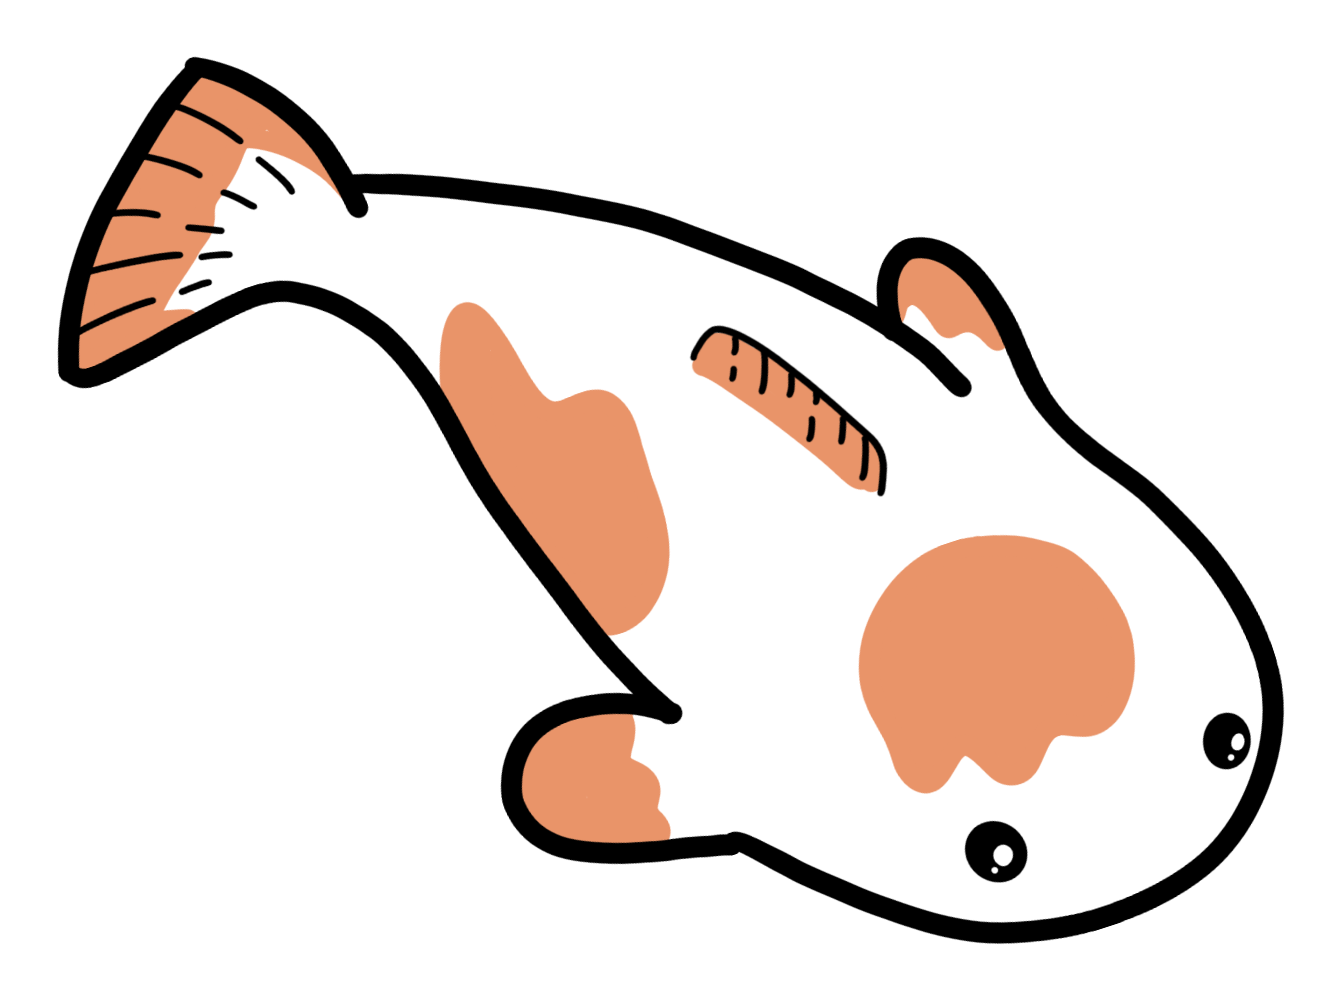 A koi fish illustration